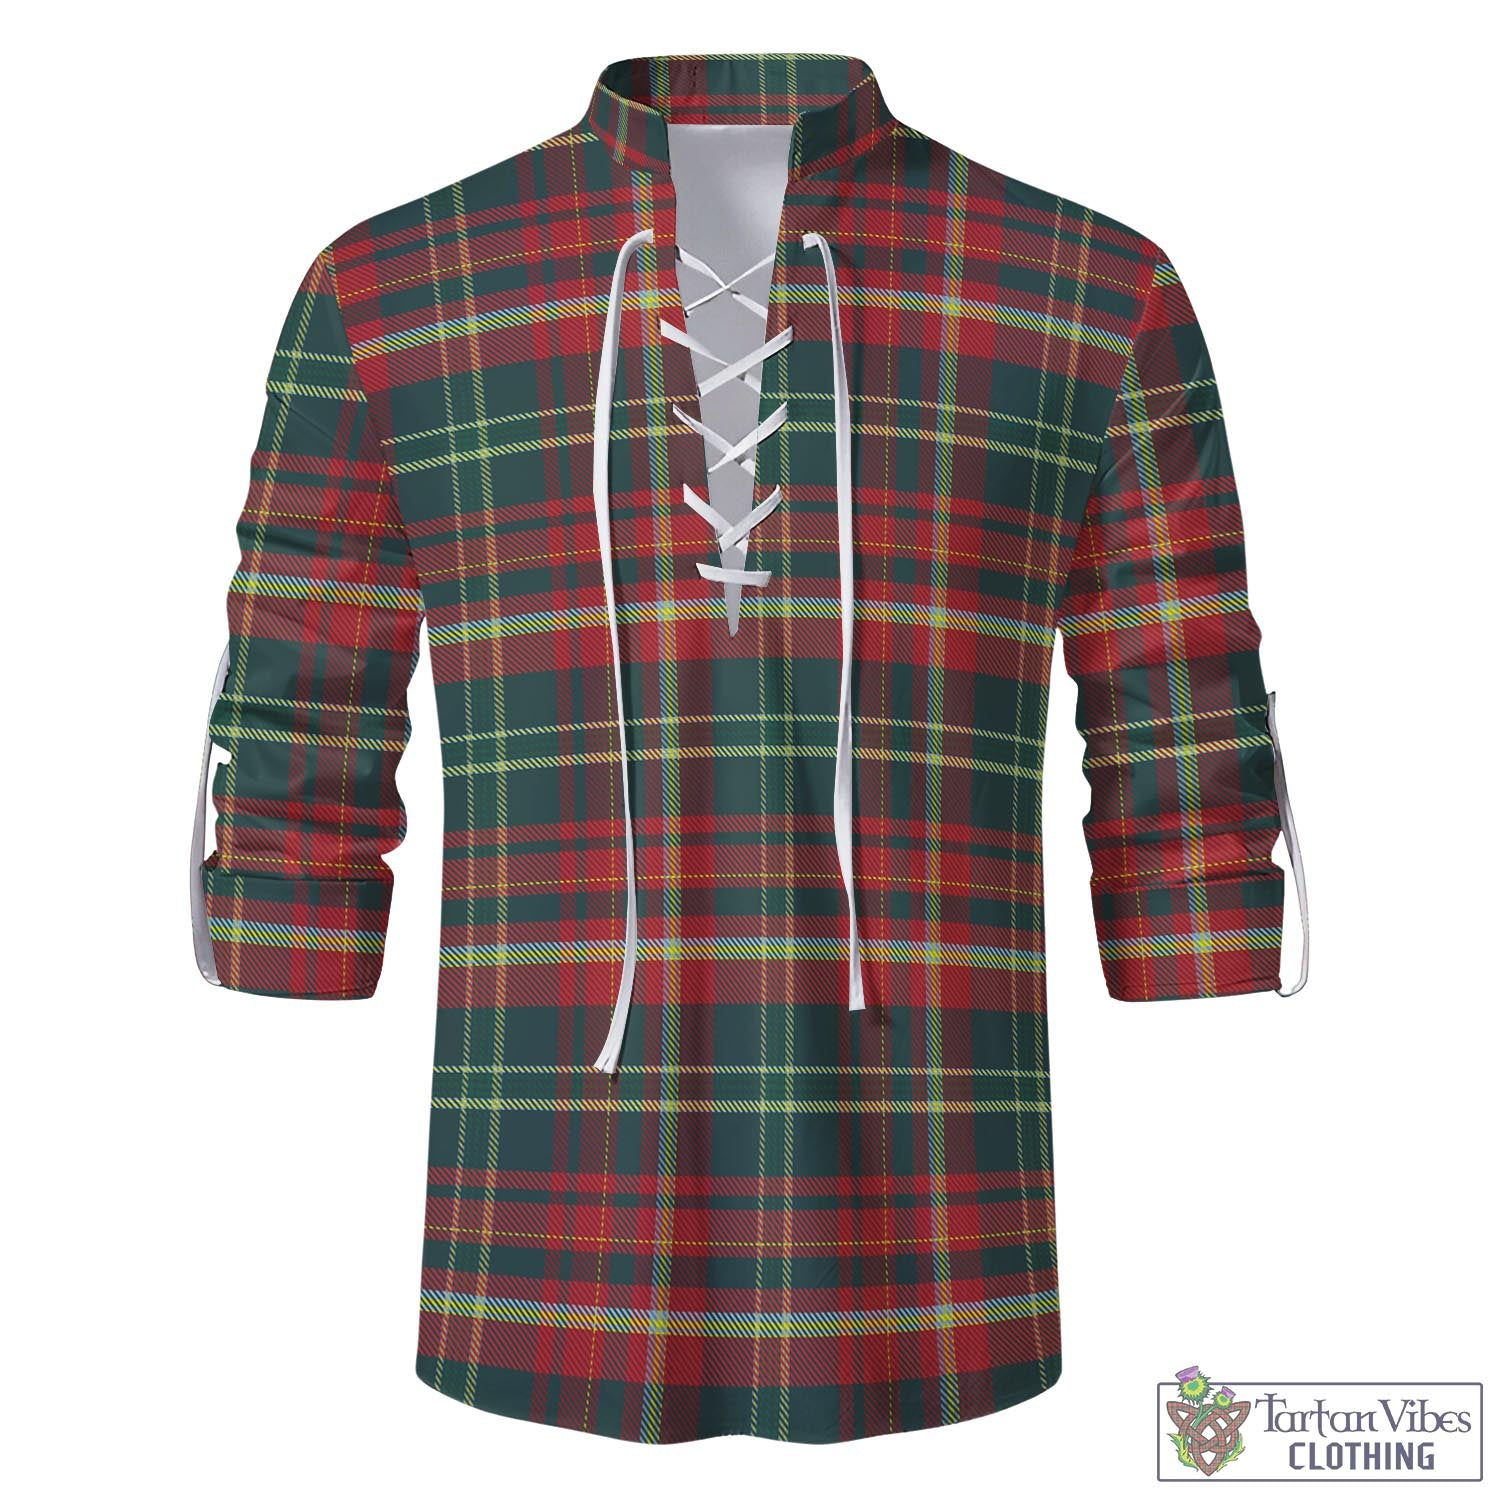 Tartan Vibes Clothing New Brunswick Province Canada Tartan Men's Scottish Traditional Jacobite Ghillie Kilt Shirt